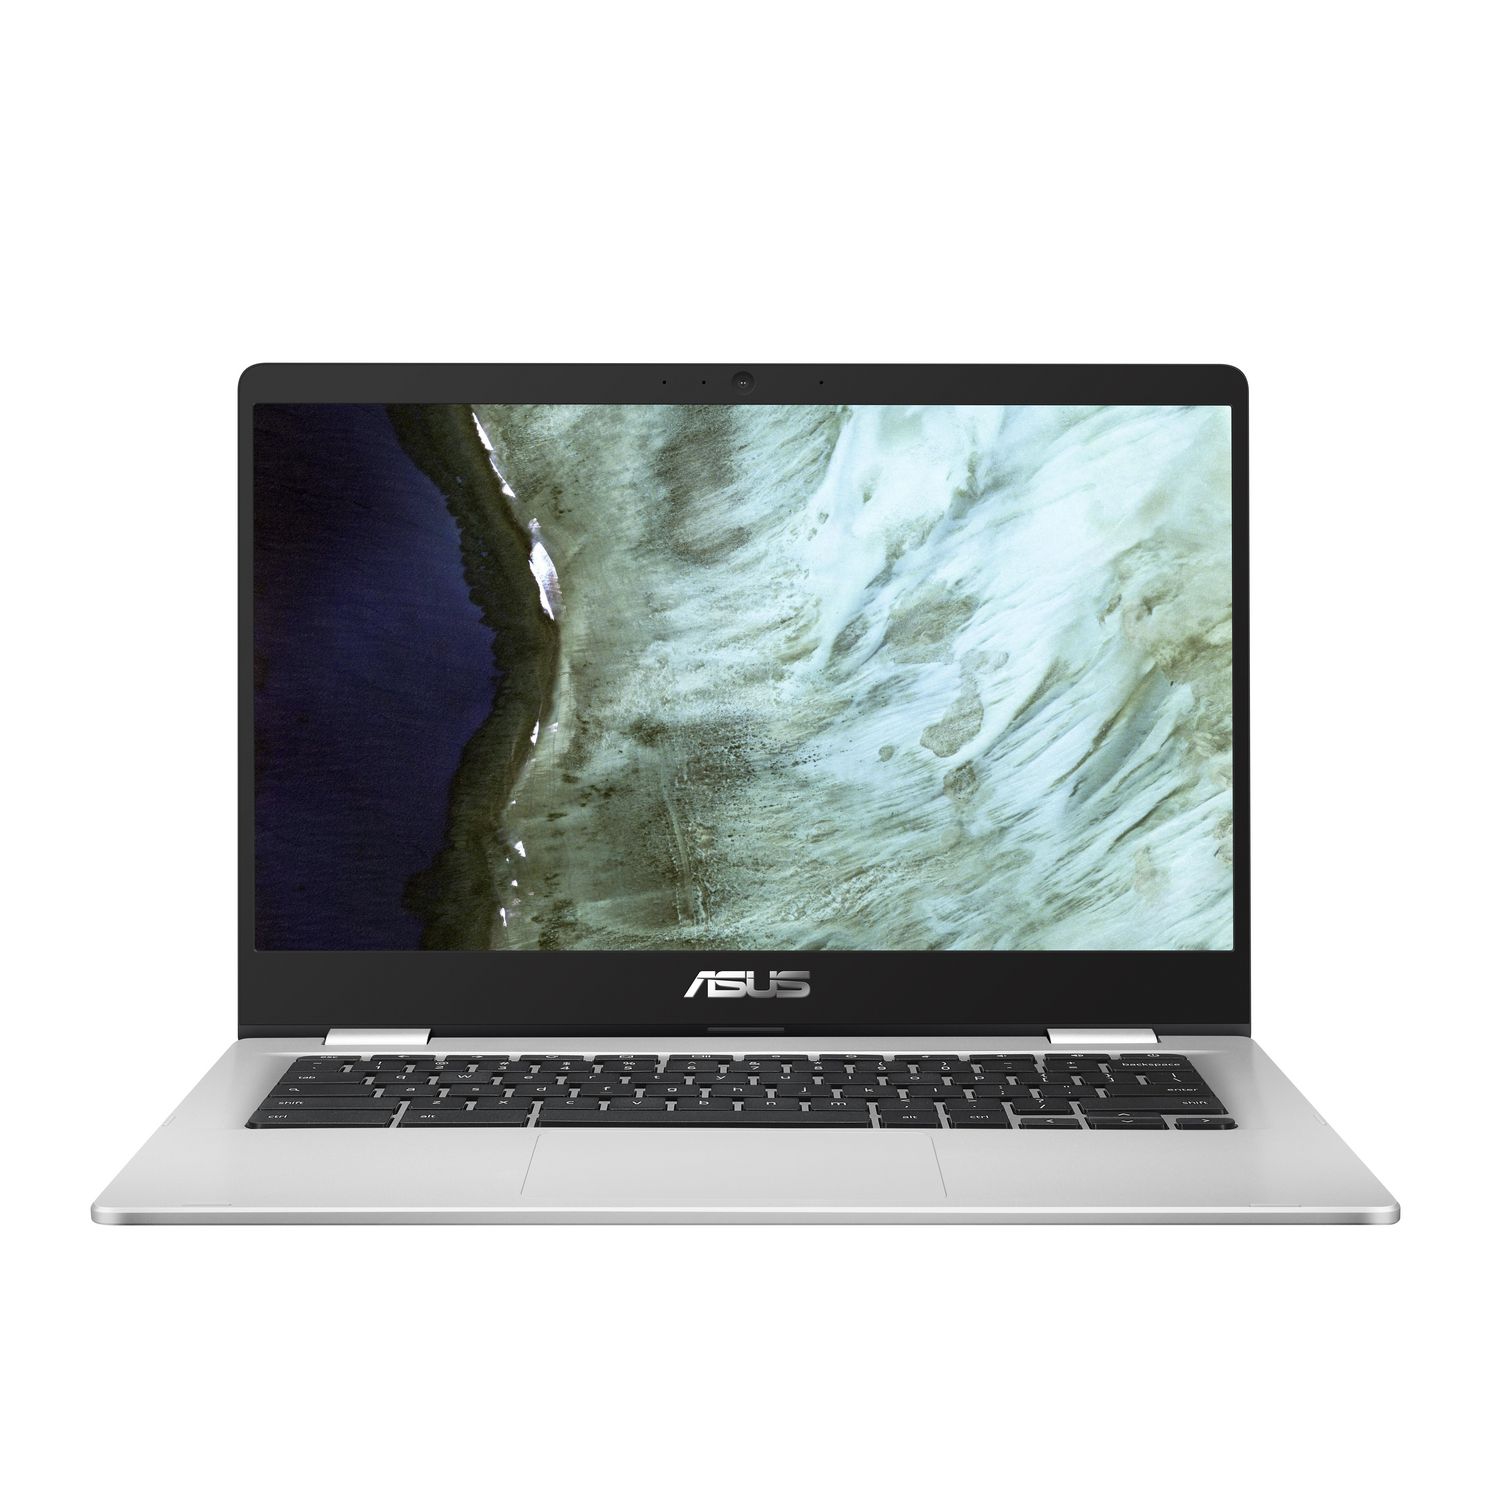 ASUS Chromebook 14.0" Laptop (Intel Dual-Core Celeron N3350, 4GB RAM, 64GB eMMC, Chrome OS) - C423NA-WB01-CB